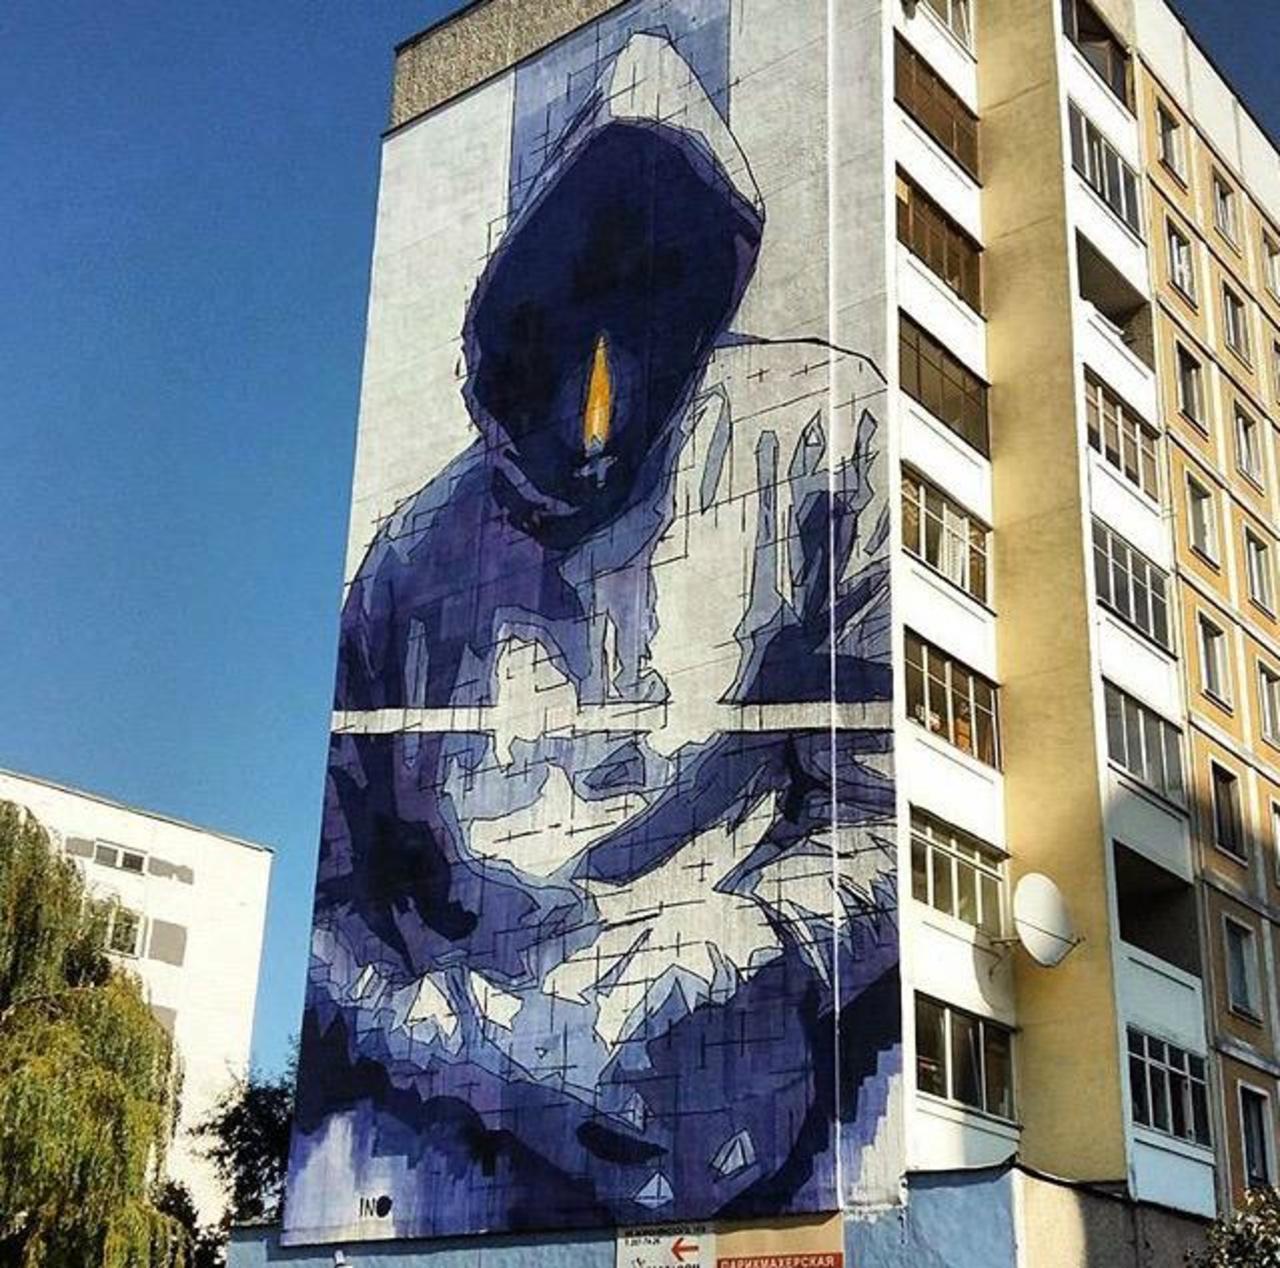 'Man With No Name' 
New Street Art by iNO in Minsk, Belarus 

#art #graffiti #mural #streetart http://t.co/HcmVC3CGBG